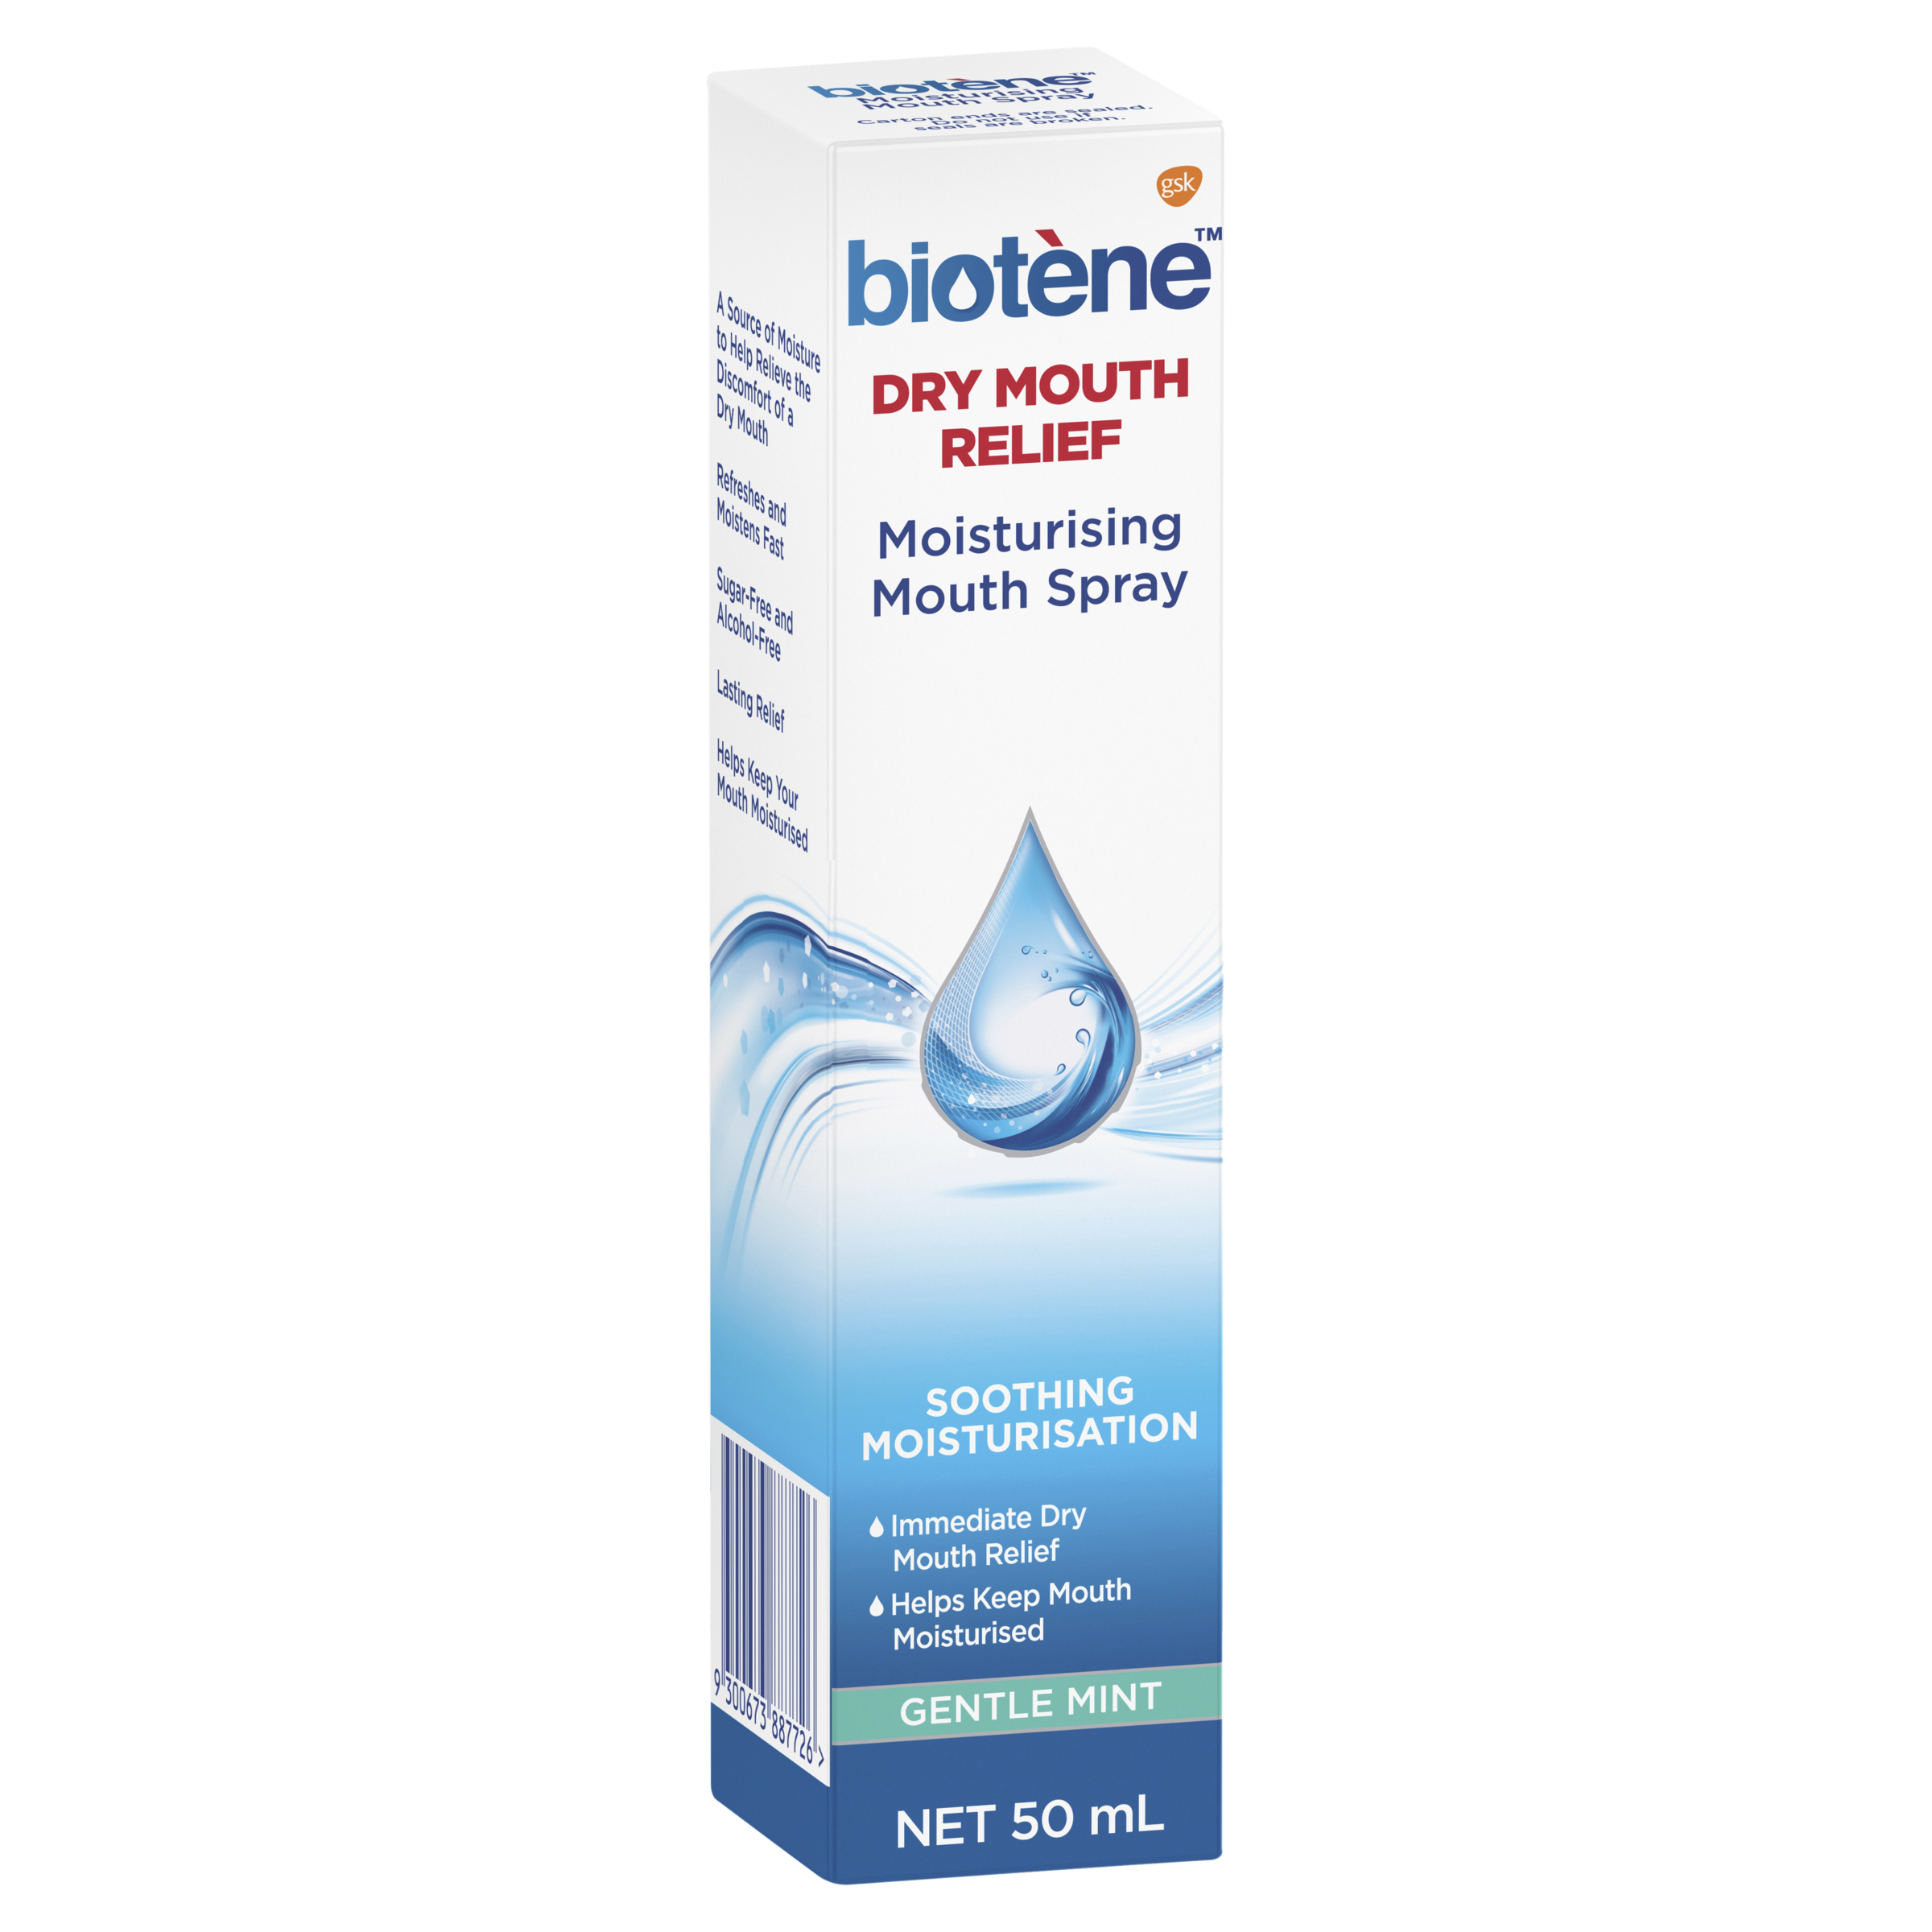 Biotene Dry Mouth Relief Moisturising Mouth Spray - Gentle Mint - Net